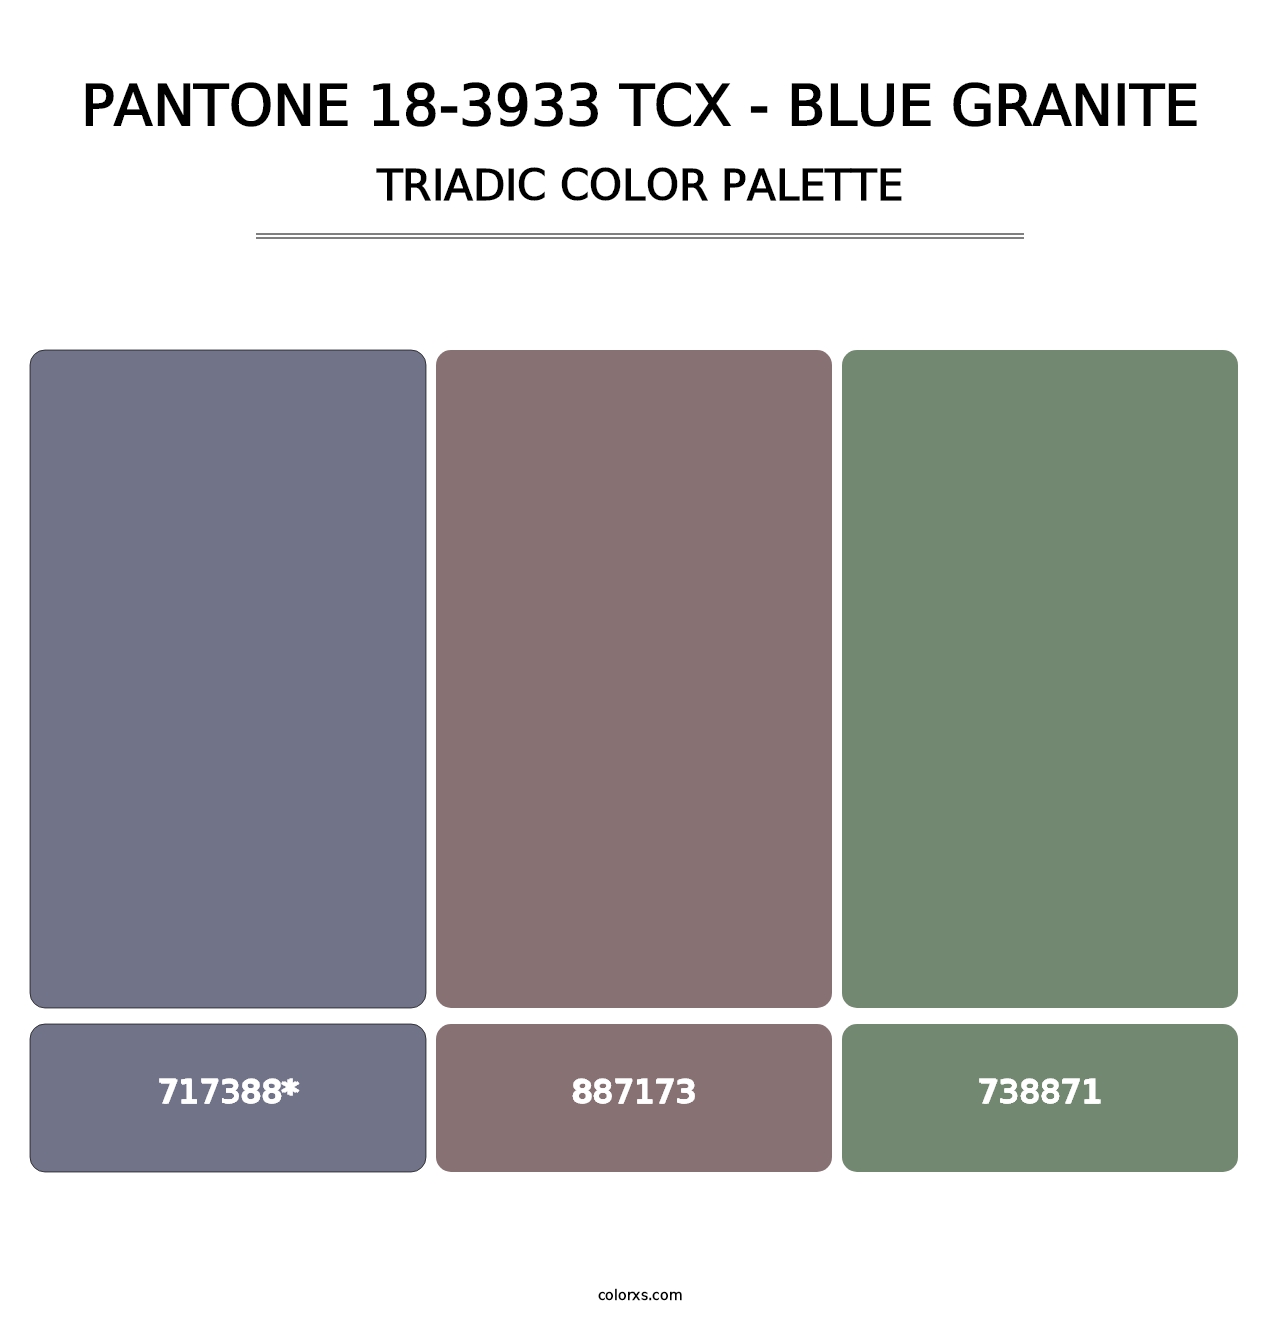 PANTONE 18-3933 TCX - Blue Granite - Triadic Color Palette